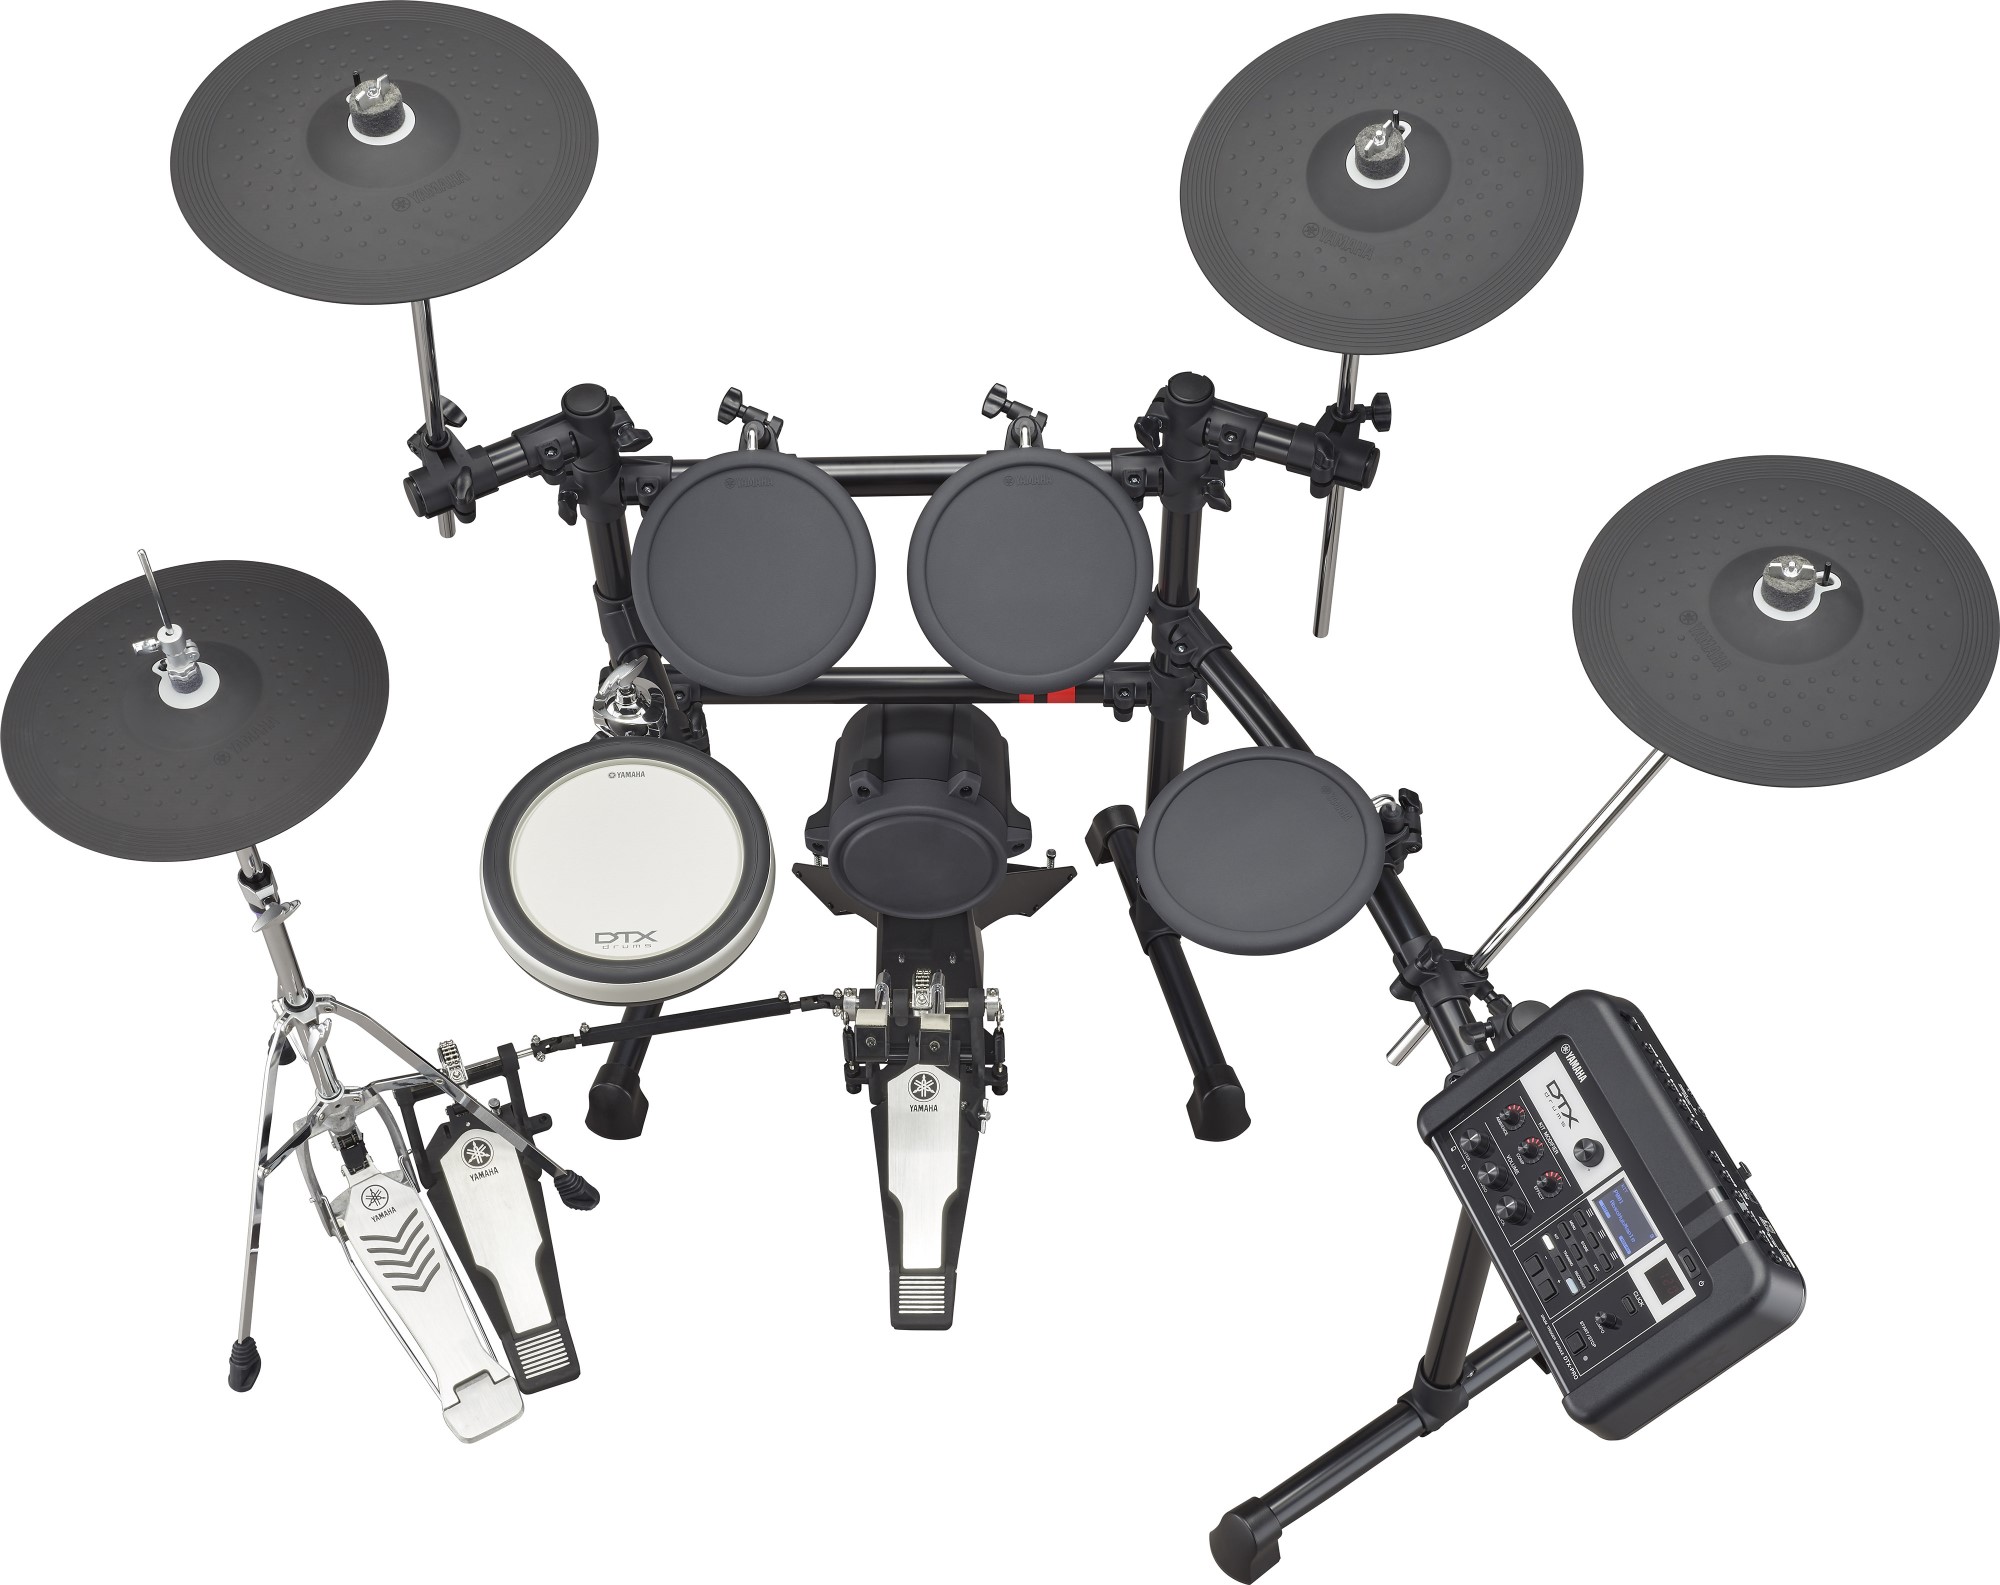 mt power drum kit 2 pro tools